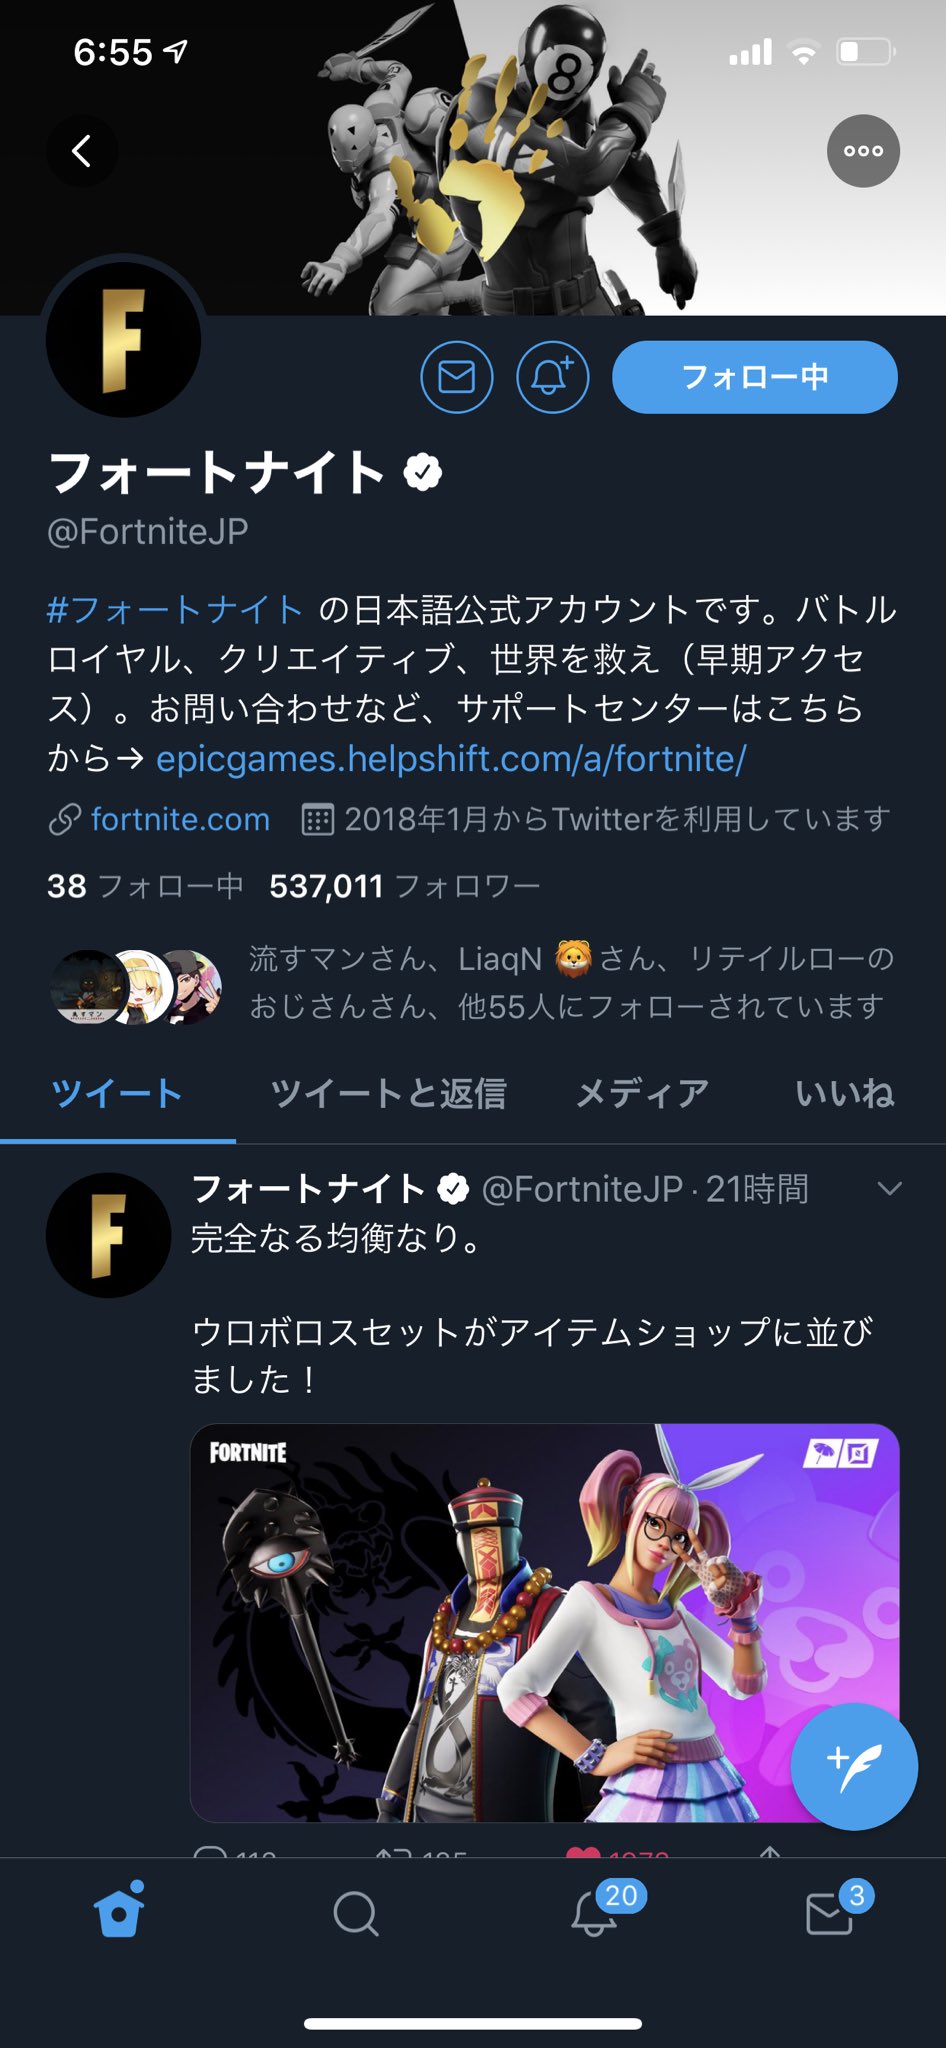 Fnjpnews 日本向け情報アカウント フォートナイト公式のアイコンとヘッダーが更新されています T Co 8uwhccbwwf Twitter